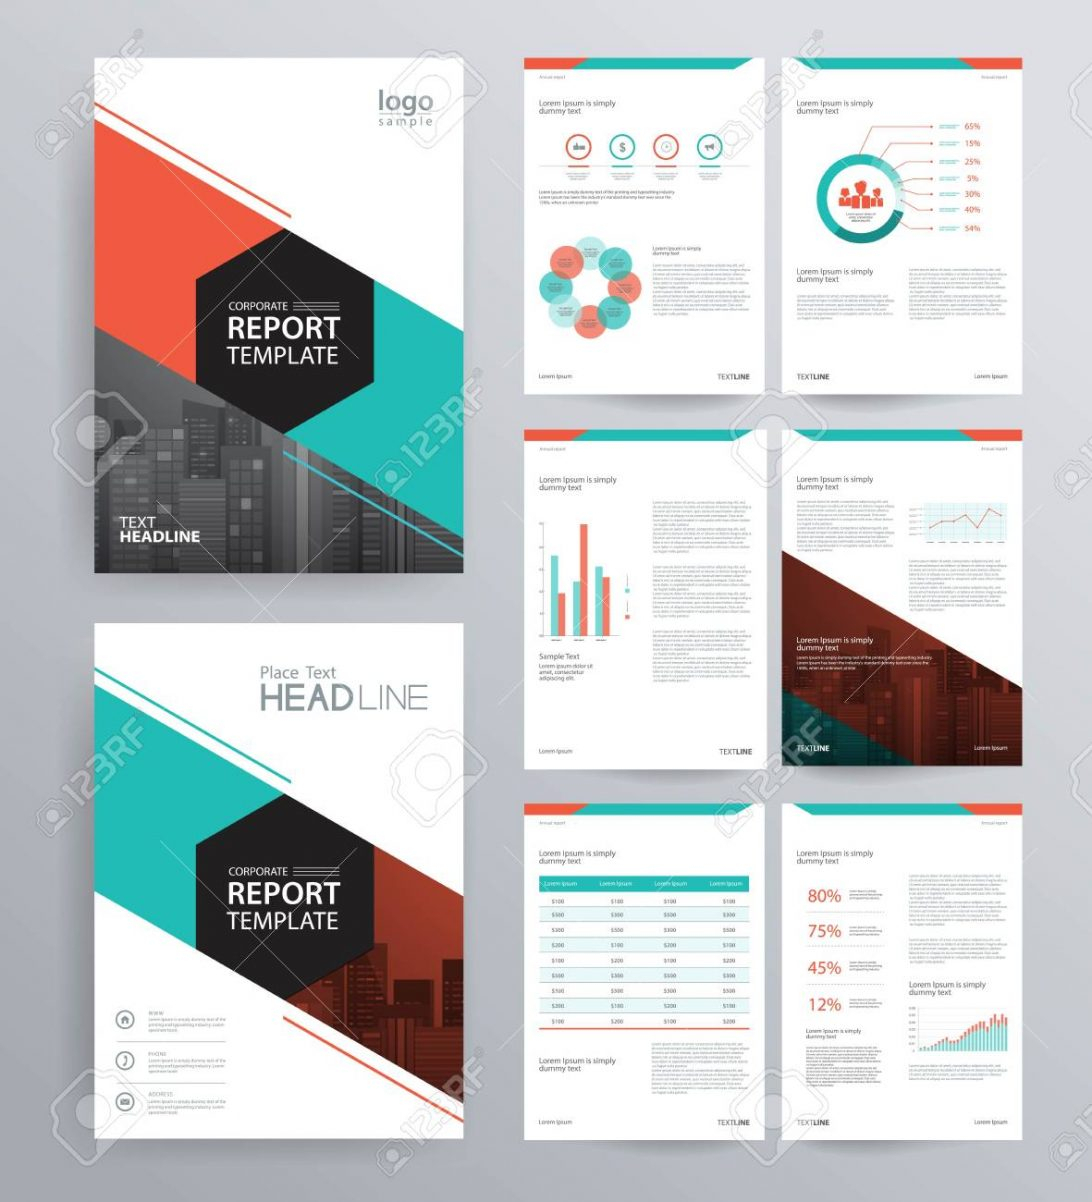 Annual Report Template Design For Company Profile Brochure In Hr Annual Report Template